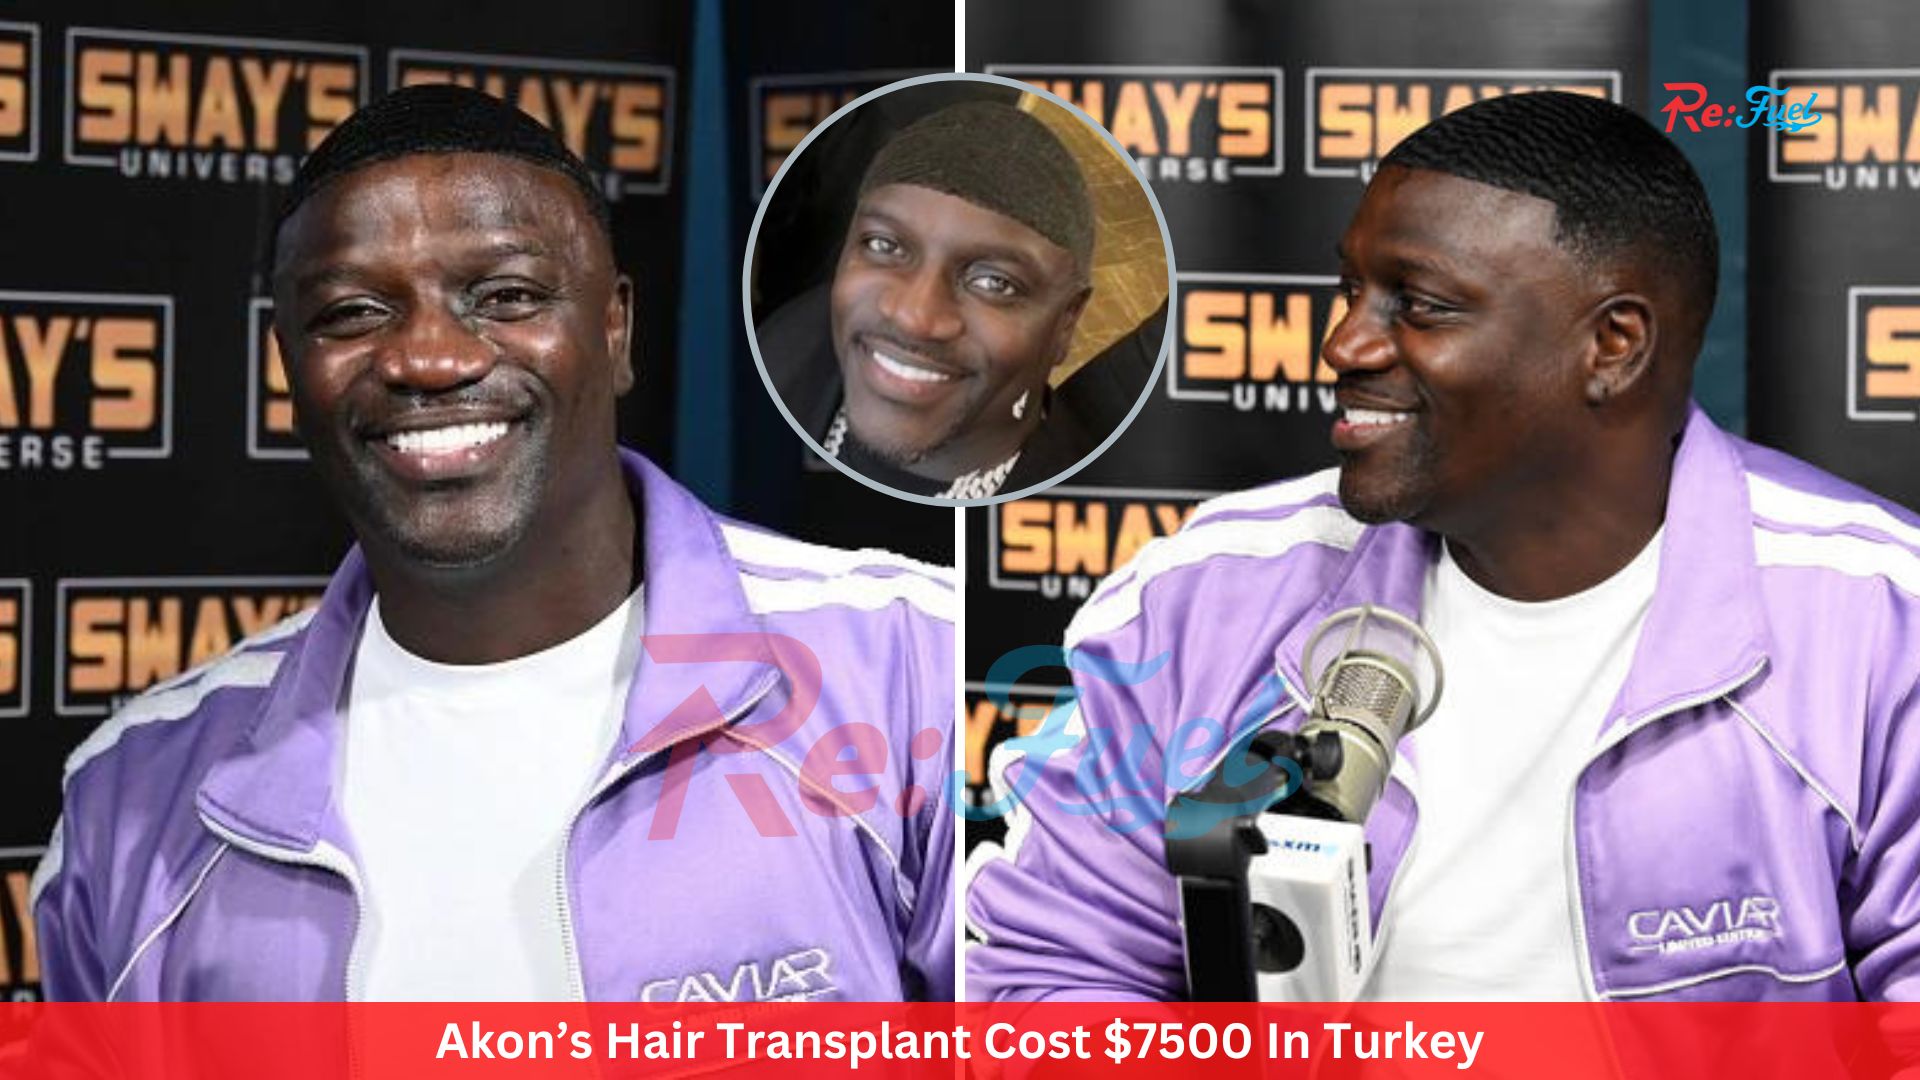 Akon’s Hair Transplant Cost $7500 In Turkey: Praises Turkey Hair Transplant, Gets Roasted